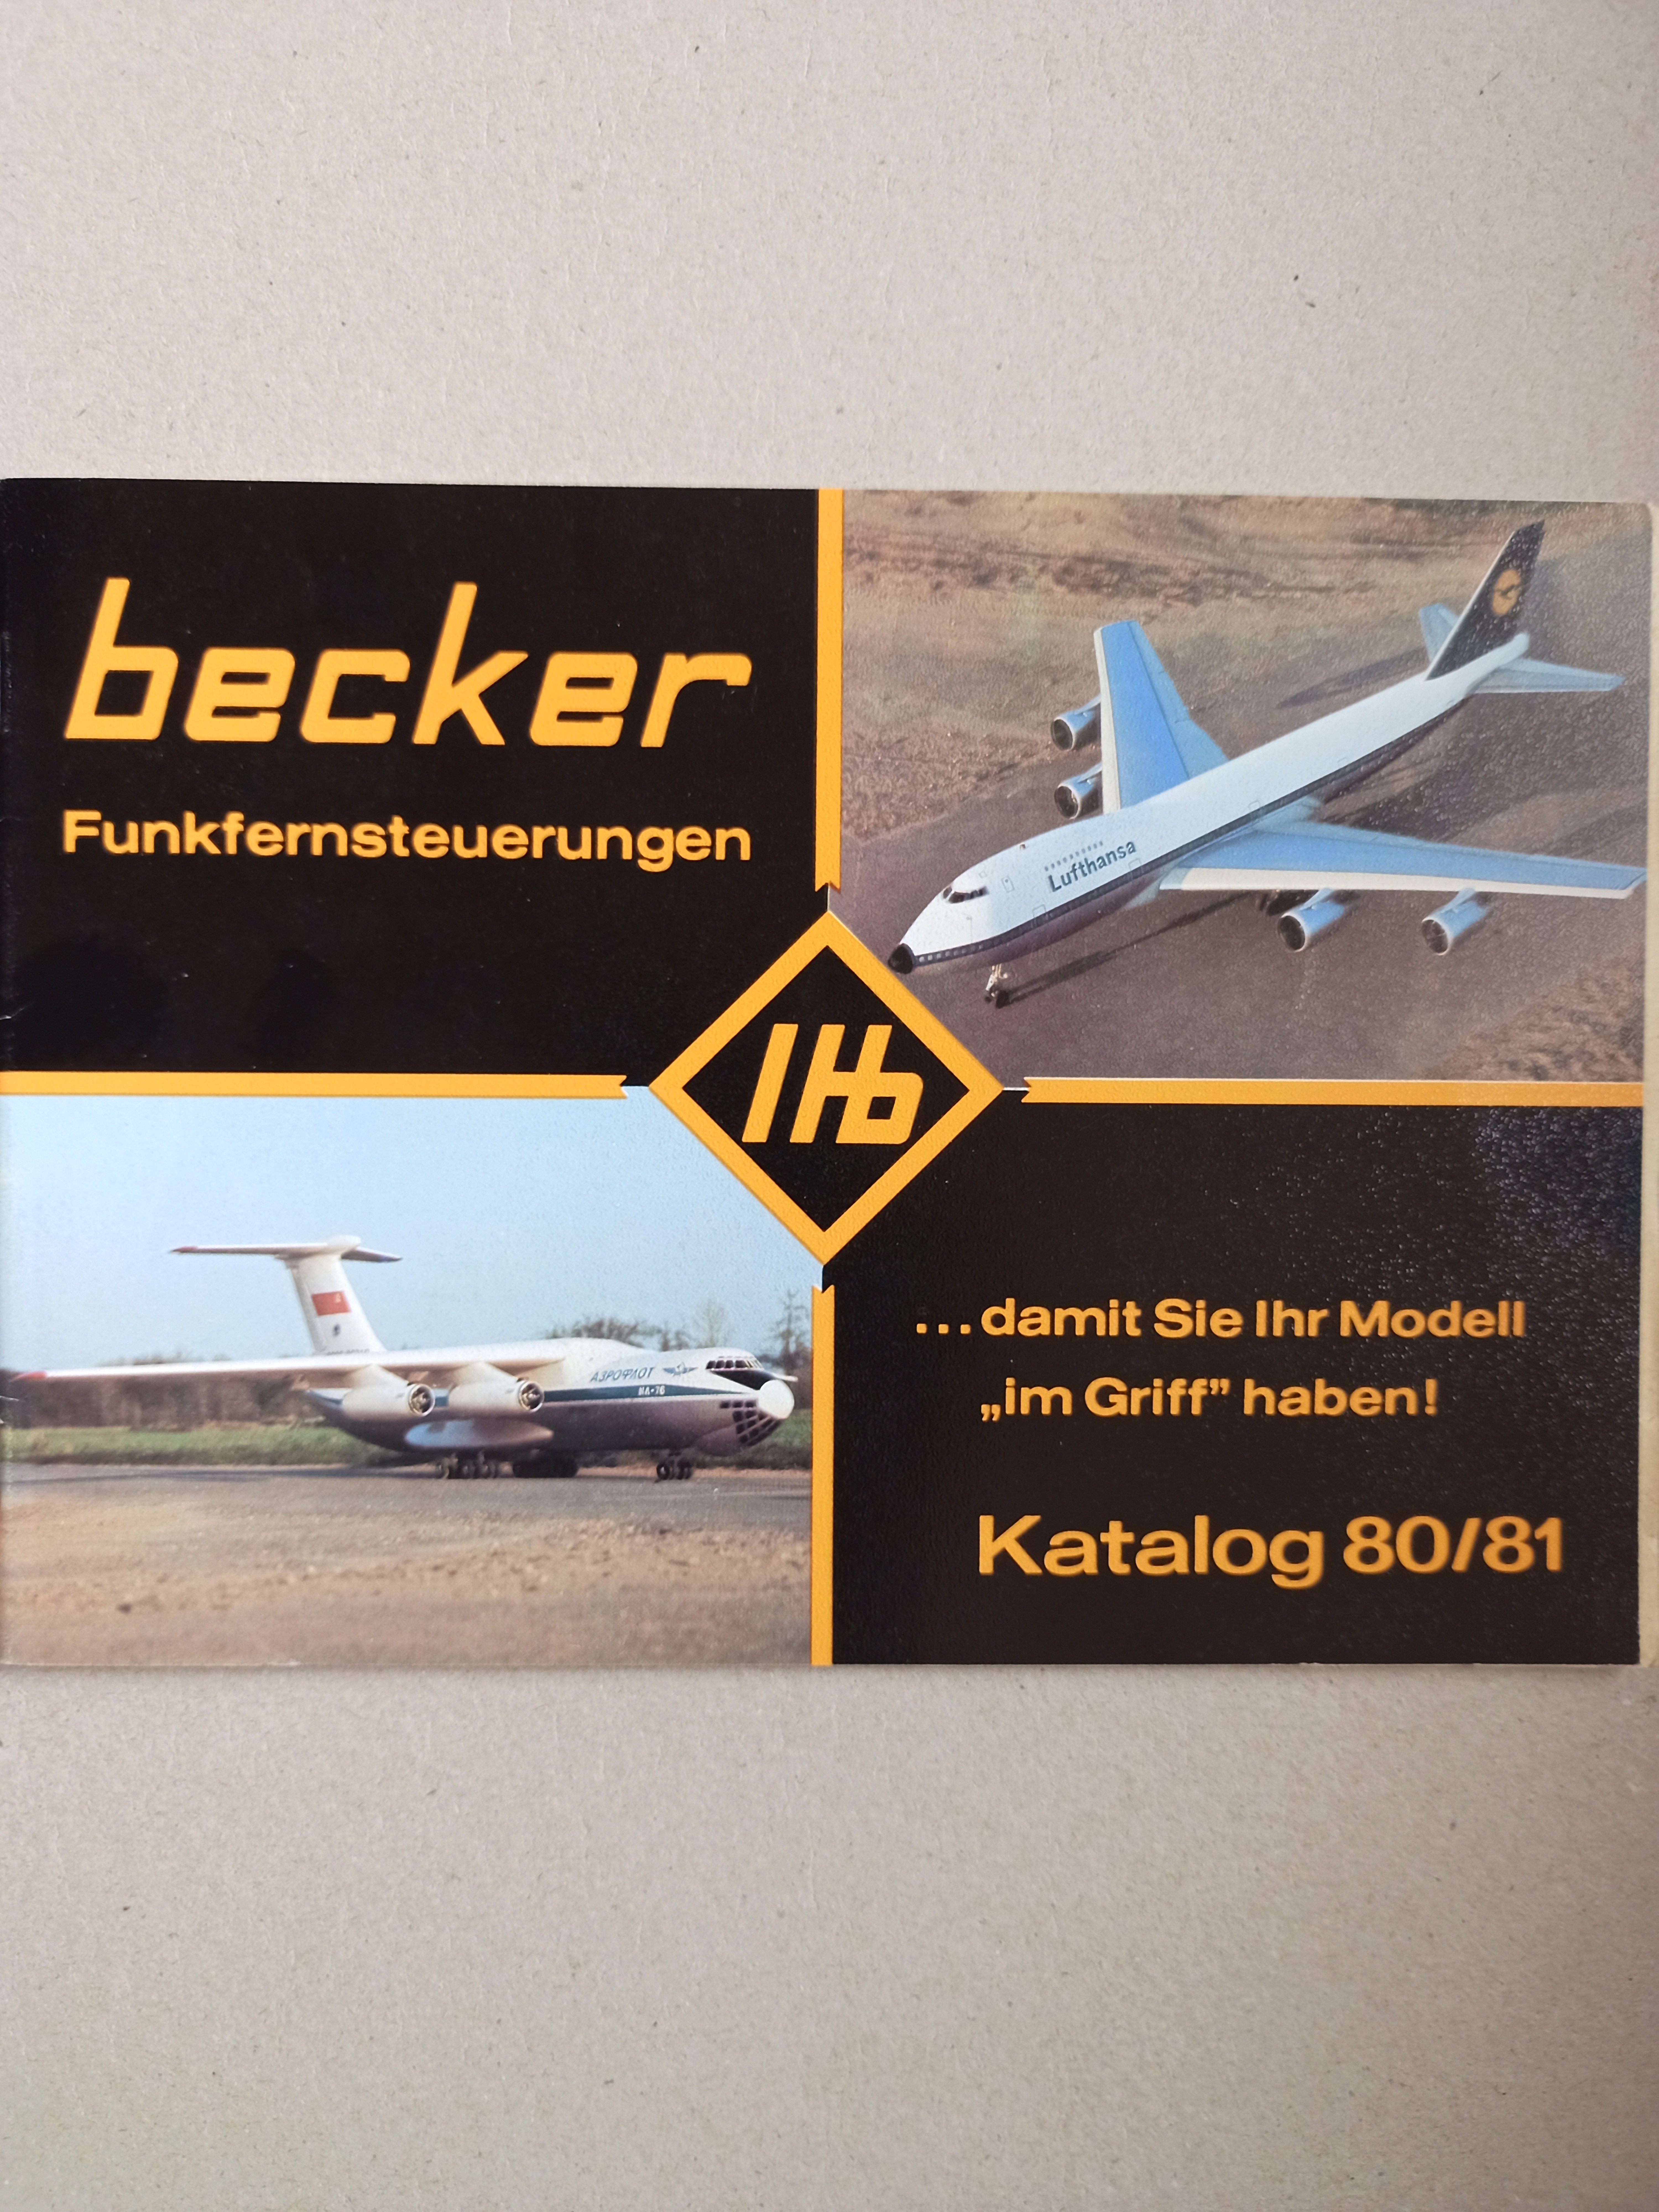 becker - Katalog 1980/81 (Deutsches Segelflugmuseum mit Modellflug CC BY-NC-SA)